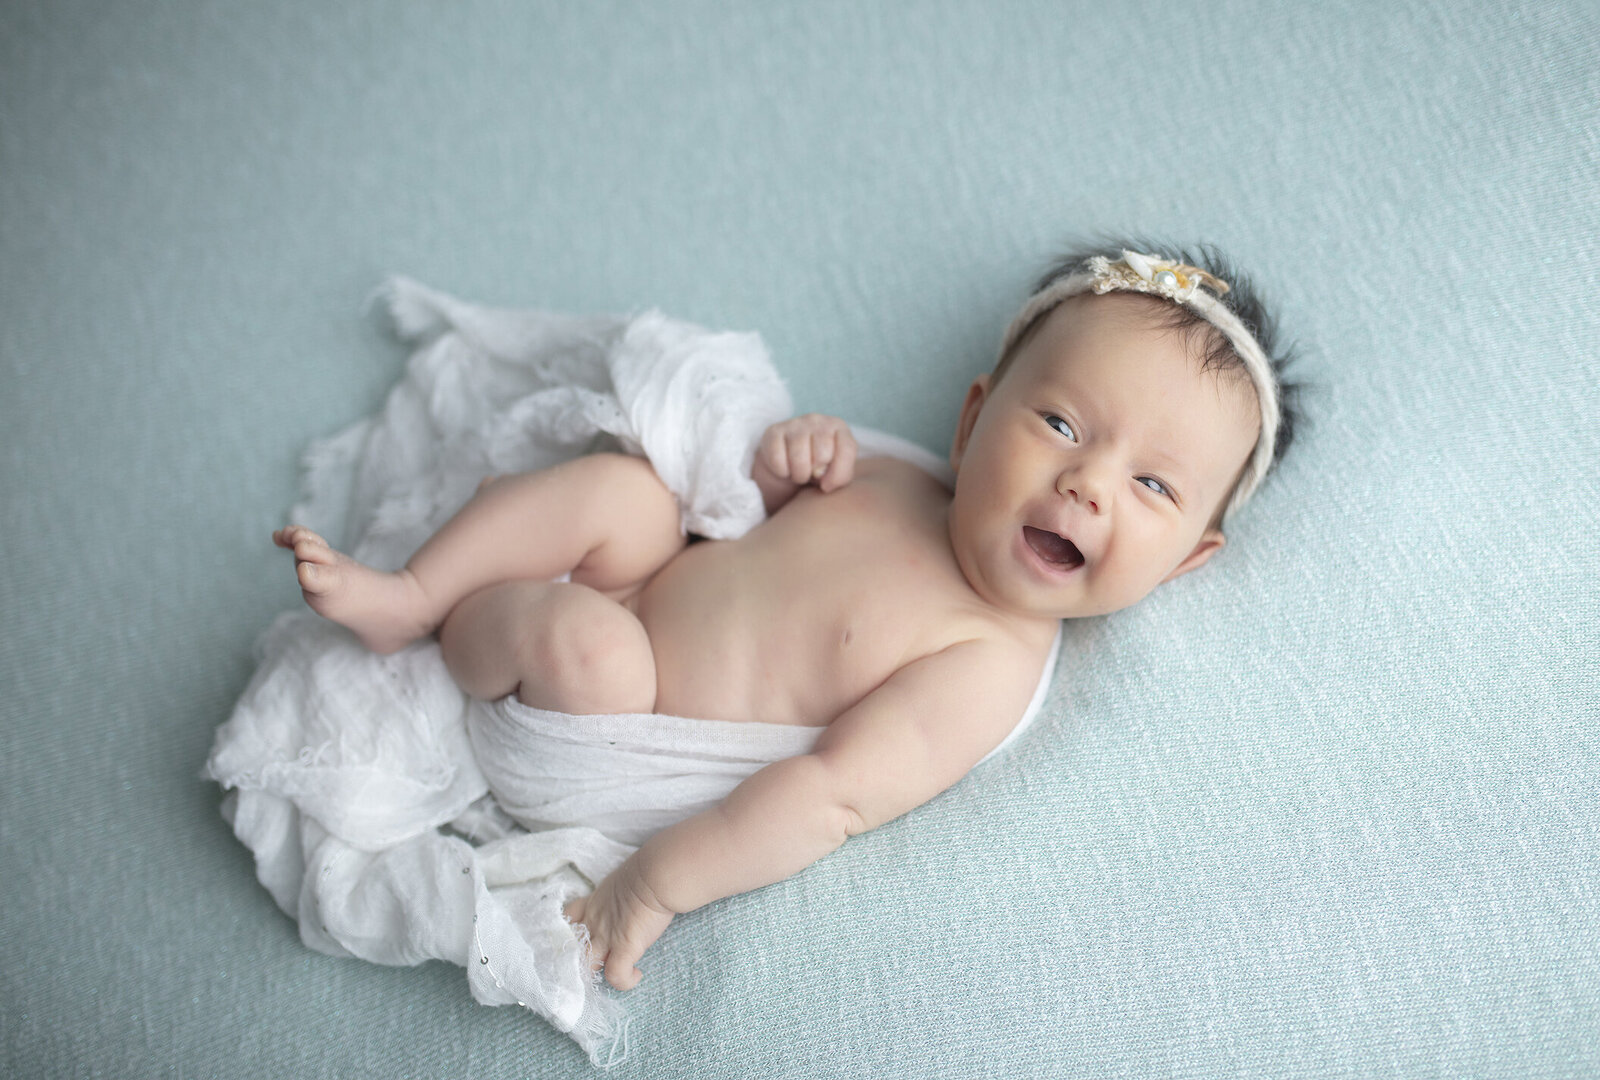 Dallas newborn girl smiling on blue fabric.